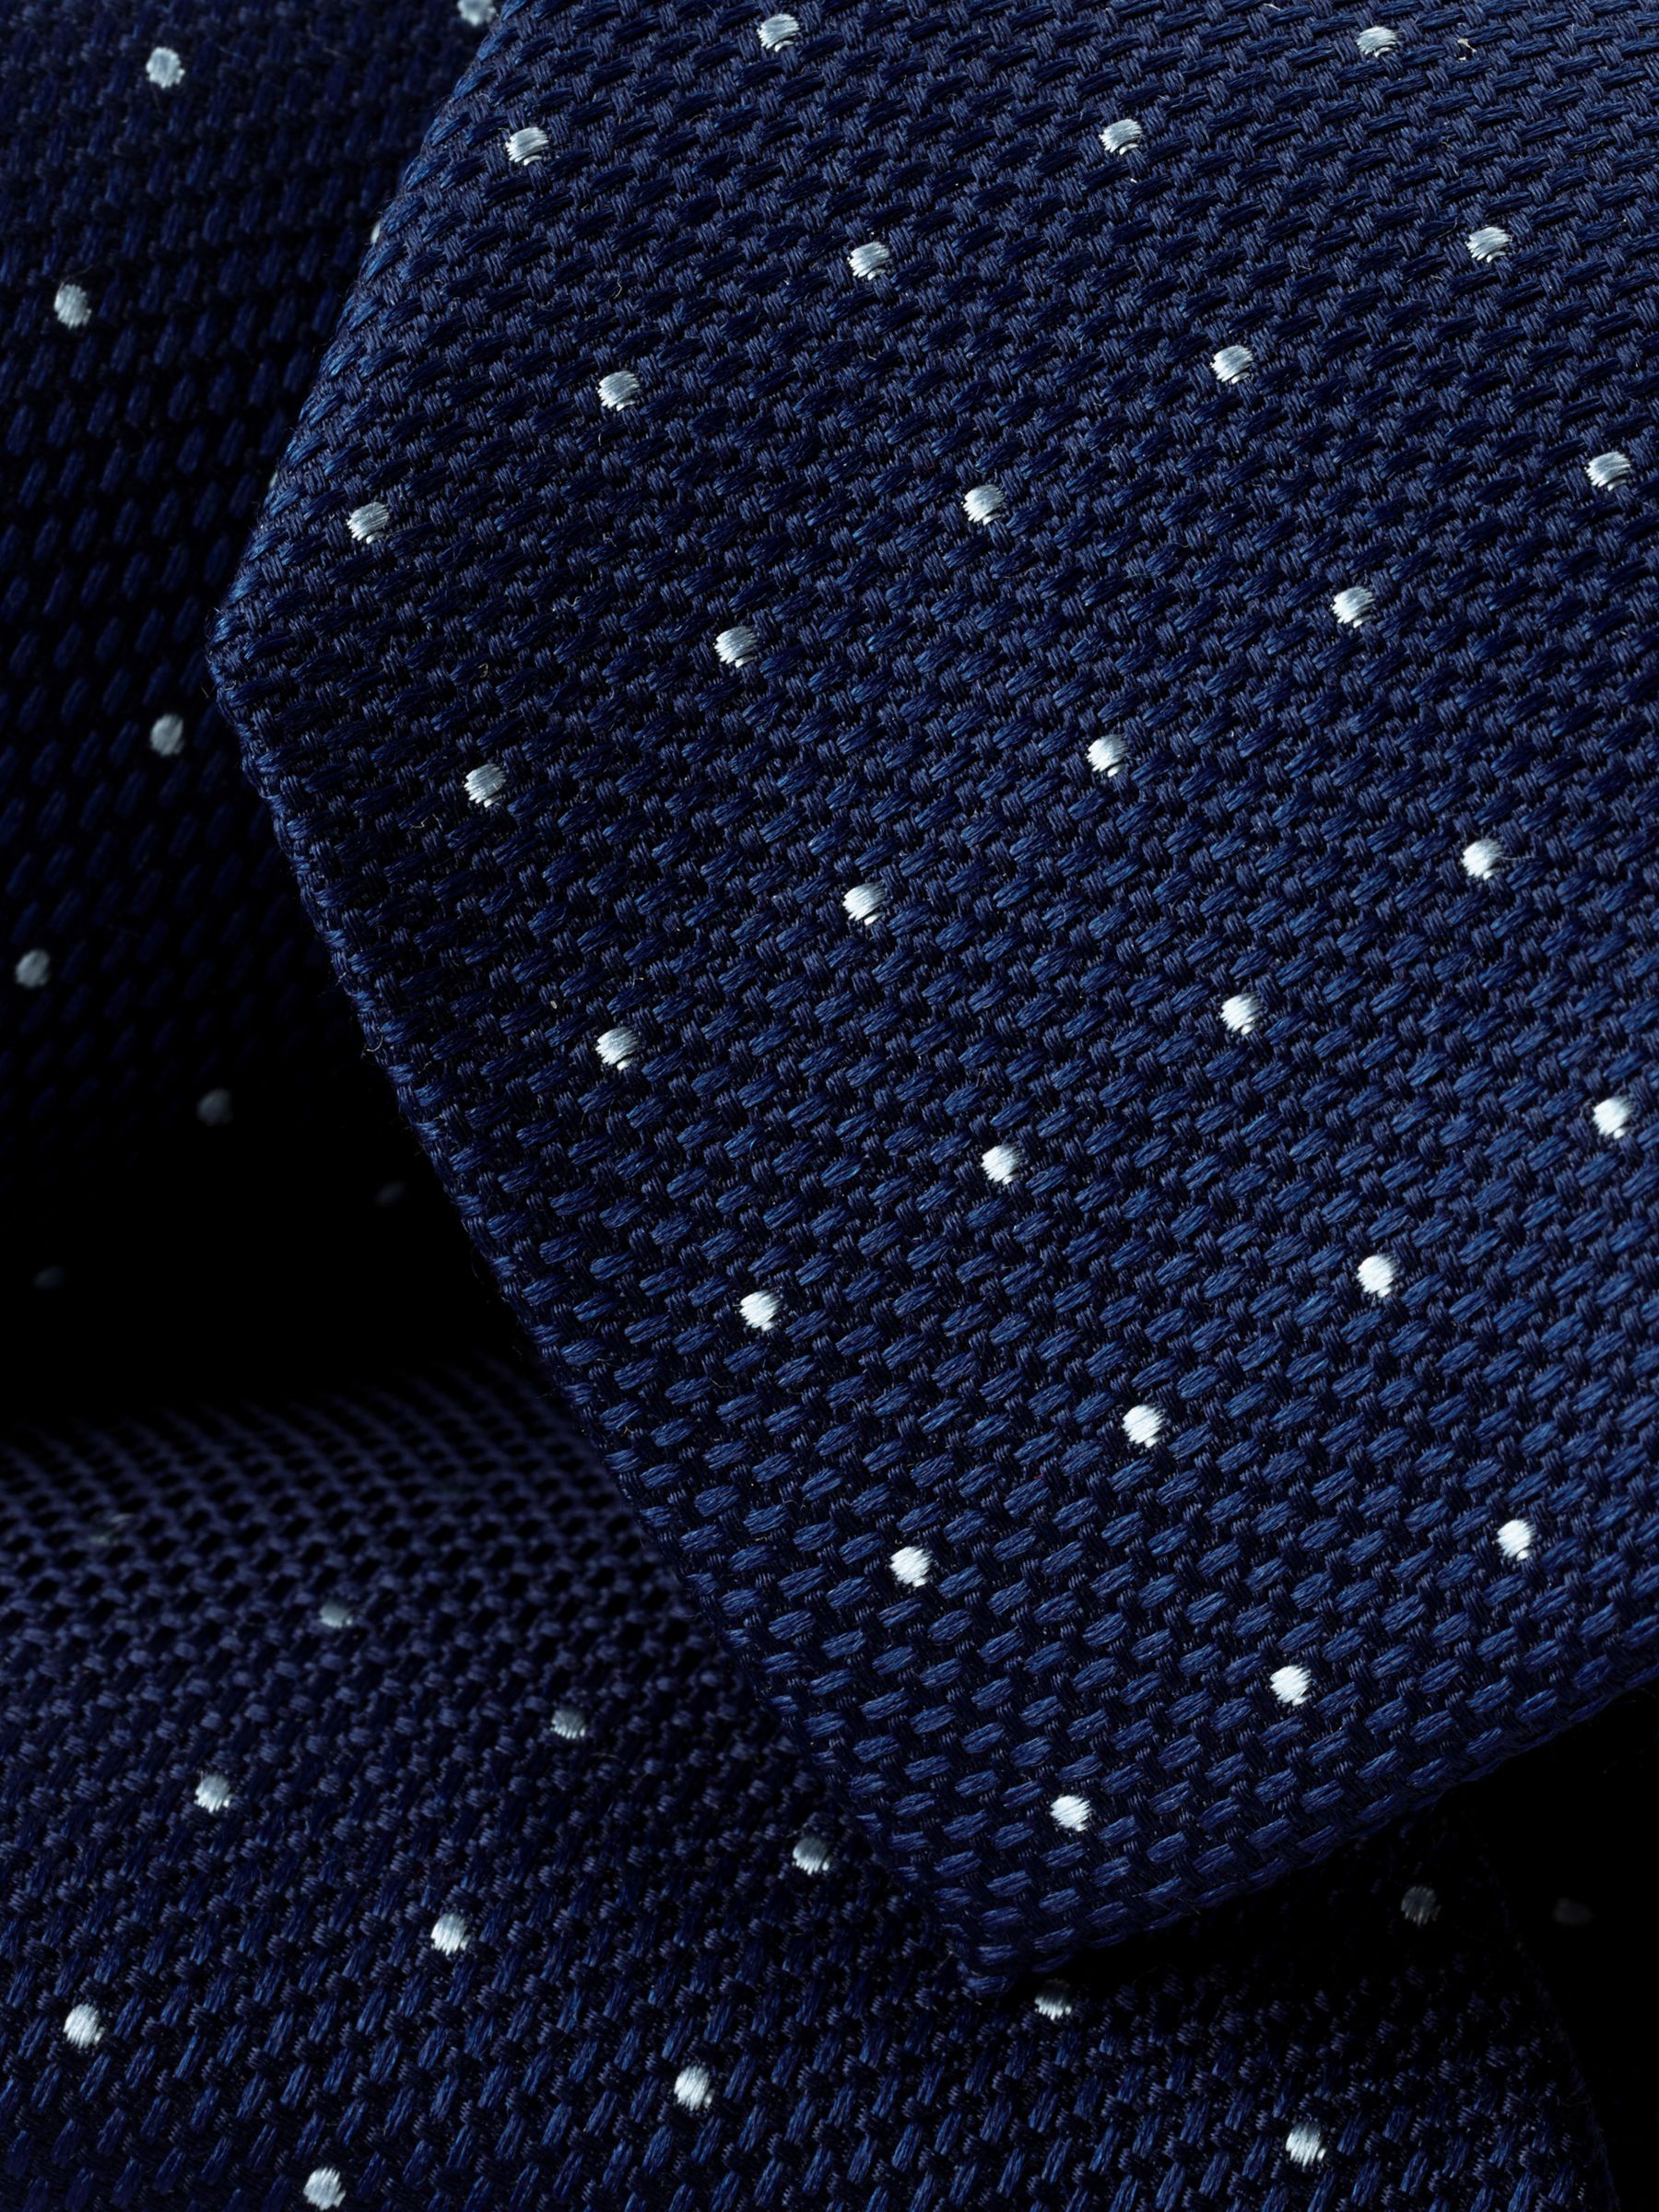 Charles Tyrwhitt Spot Print Stain Resistant Silk Tie, Petrol Blue, One Size